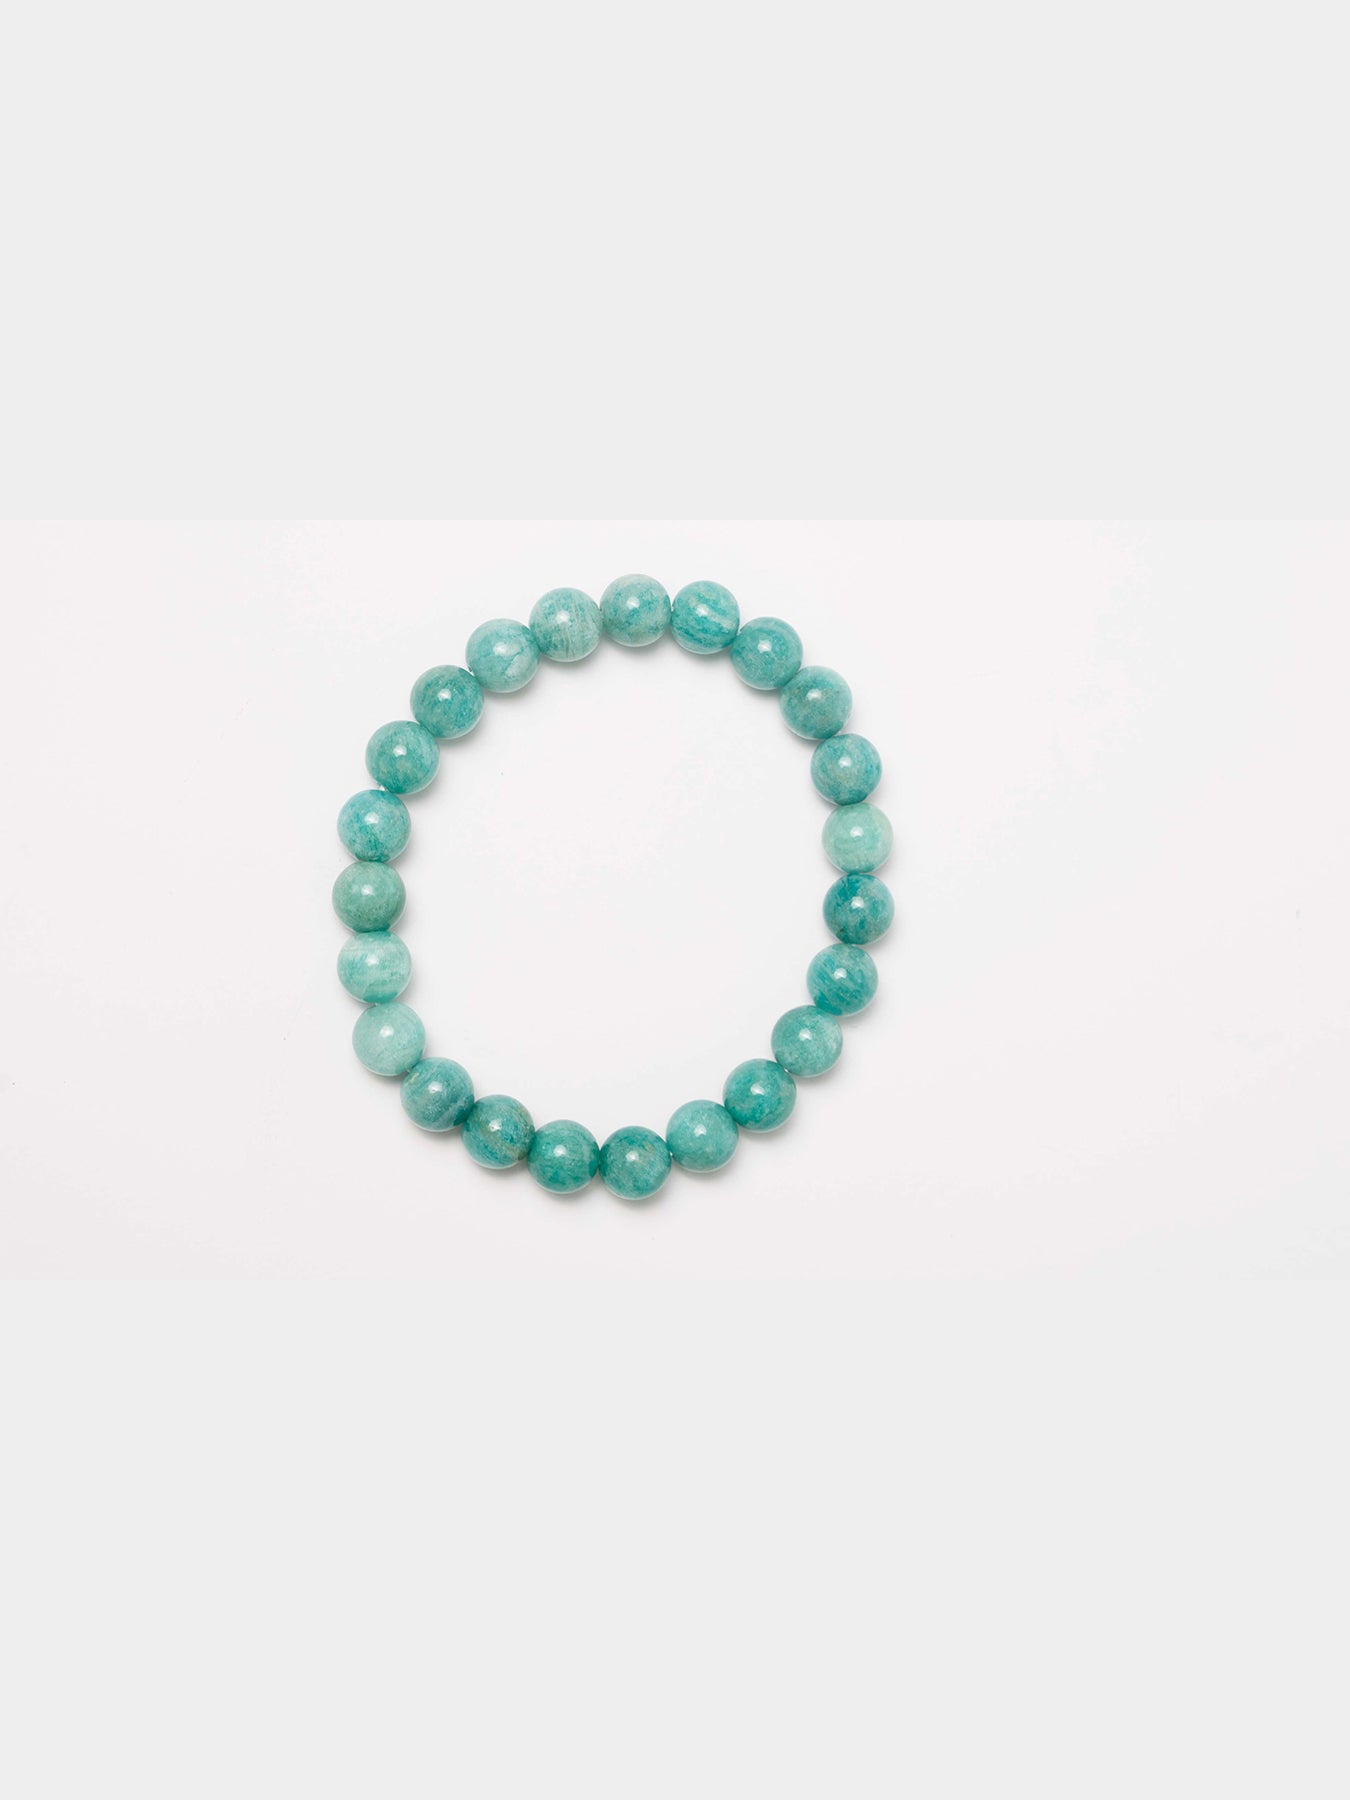 Tianhe stone bead bracelet